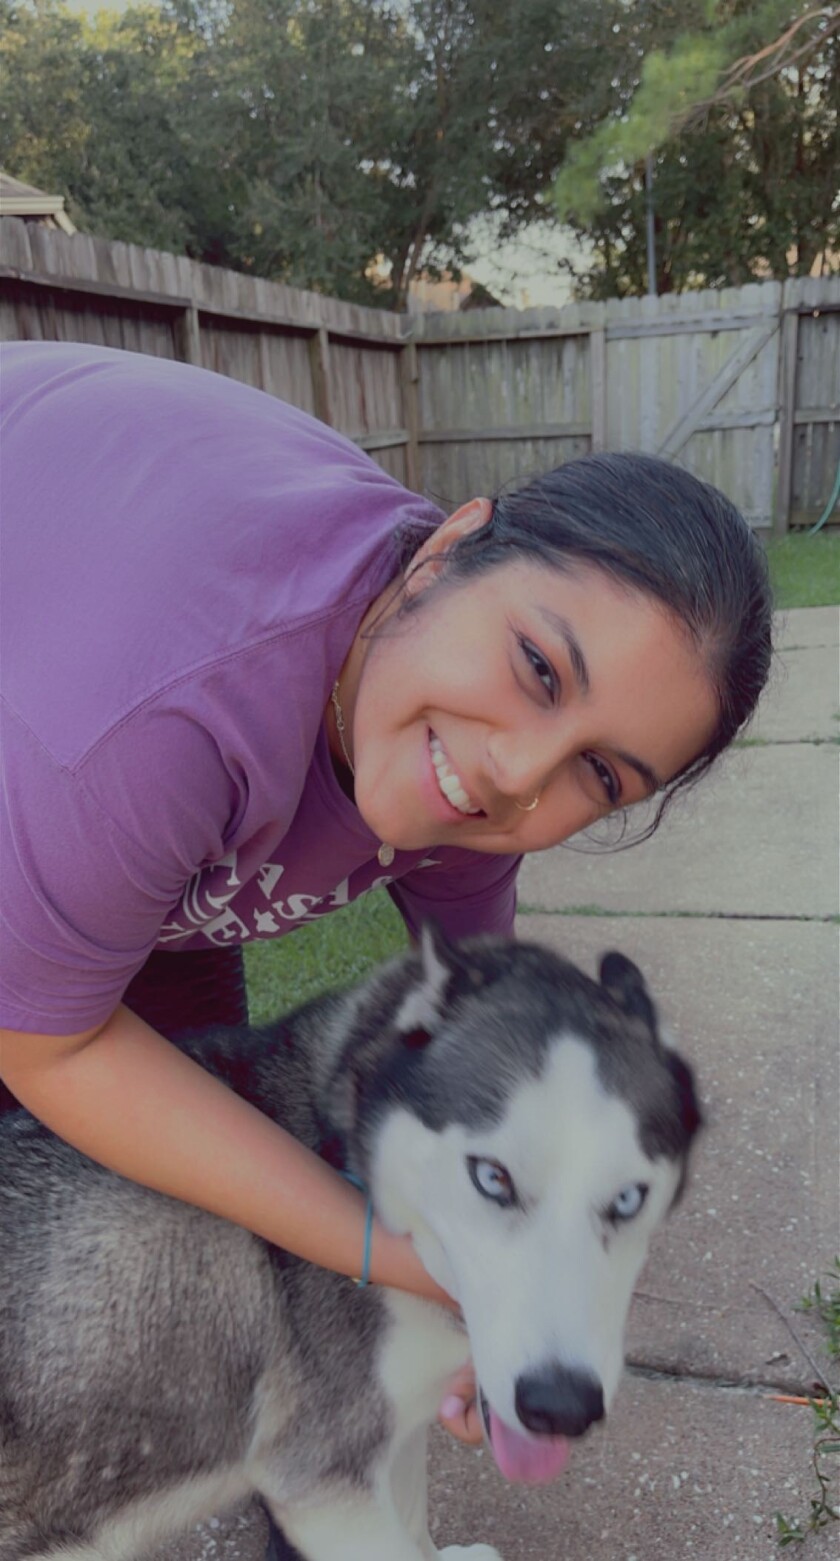 Astroworld victim Bharti Shahani, 22, with her husky, Blue.